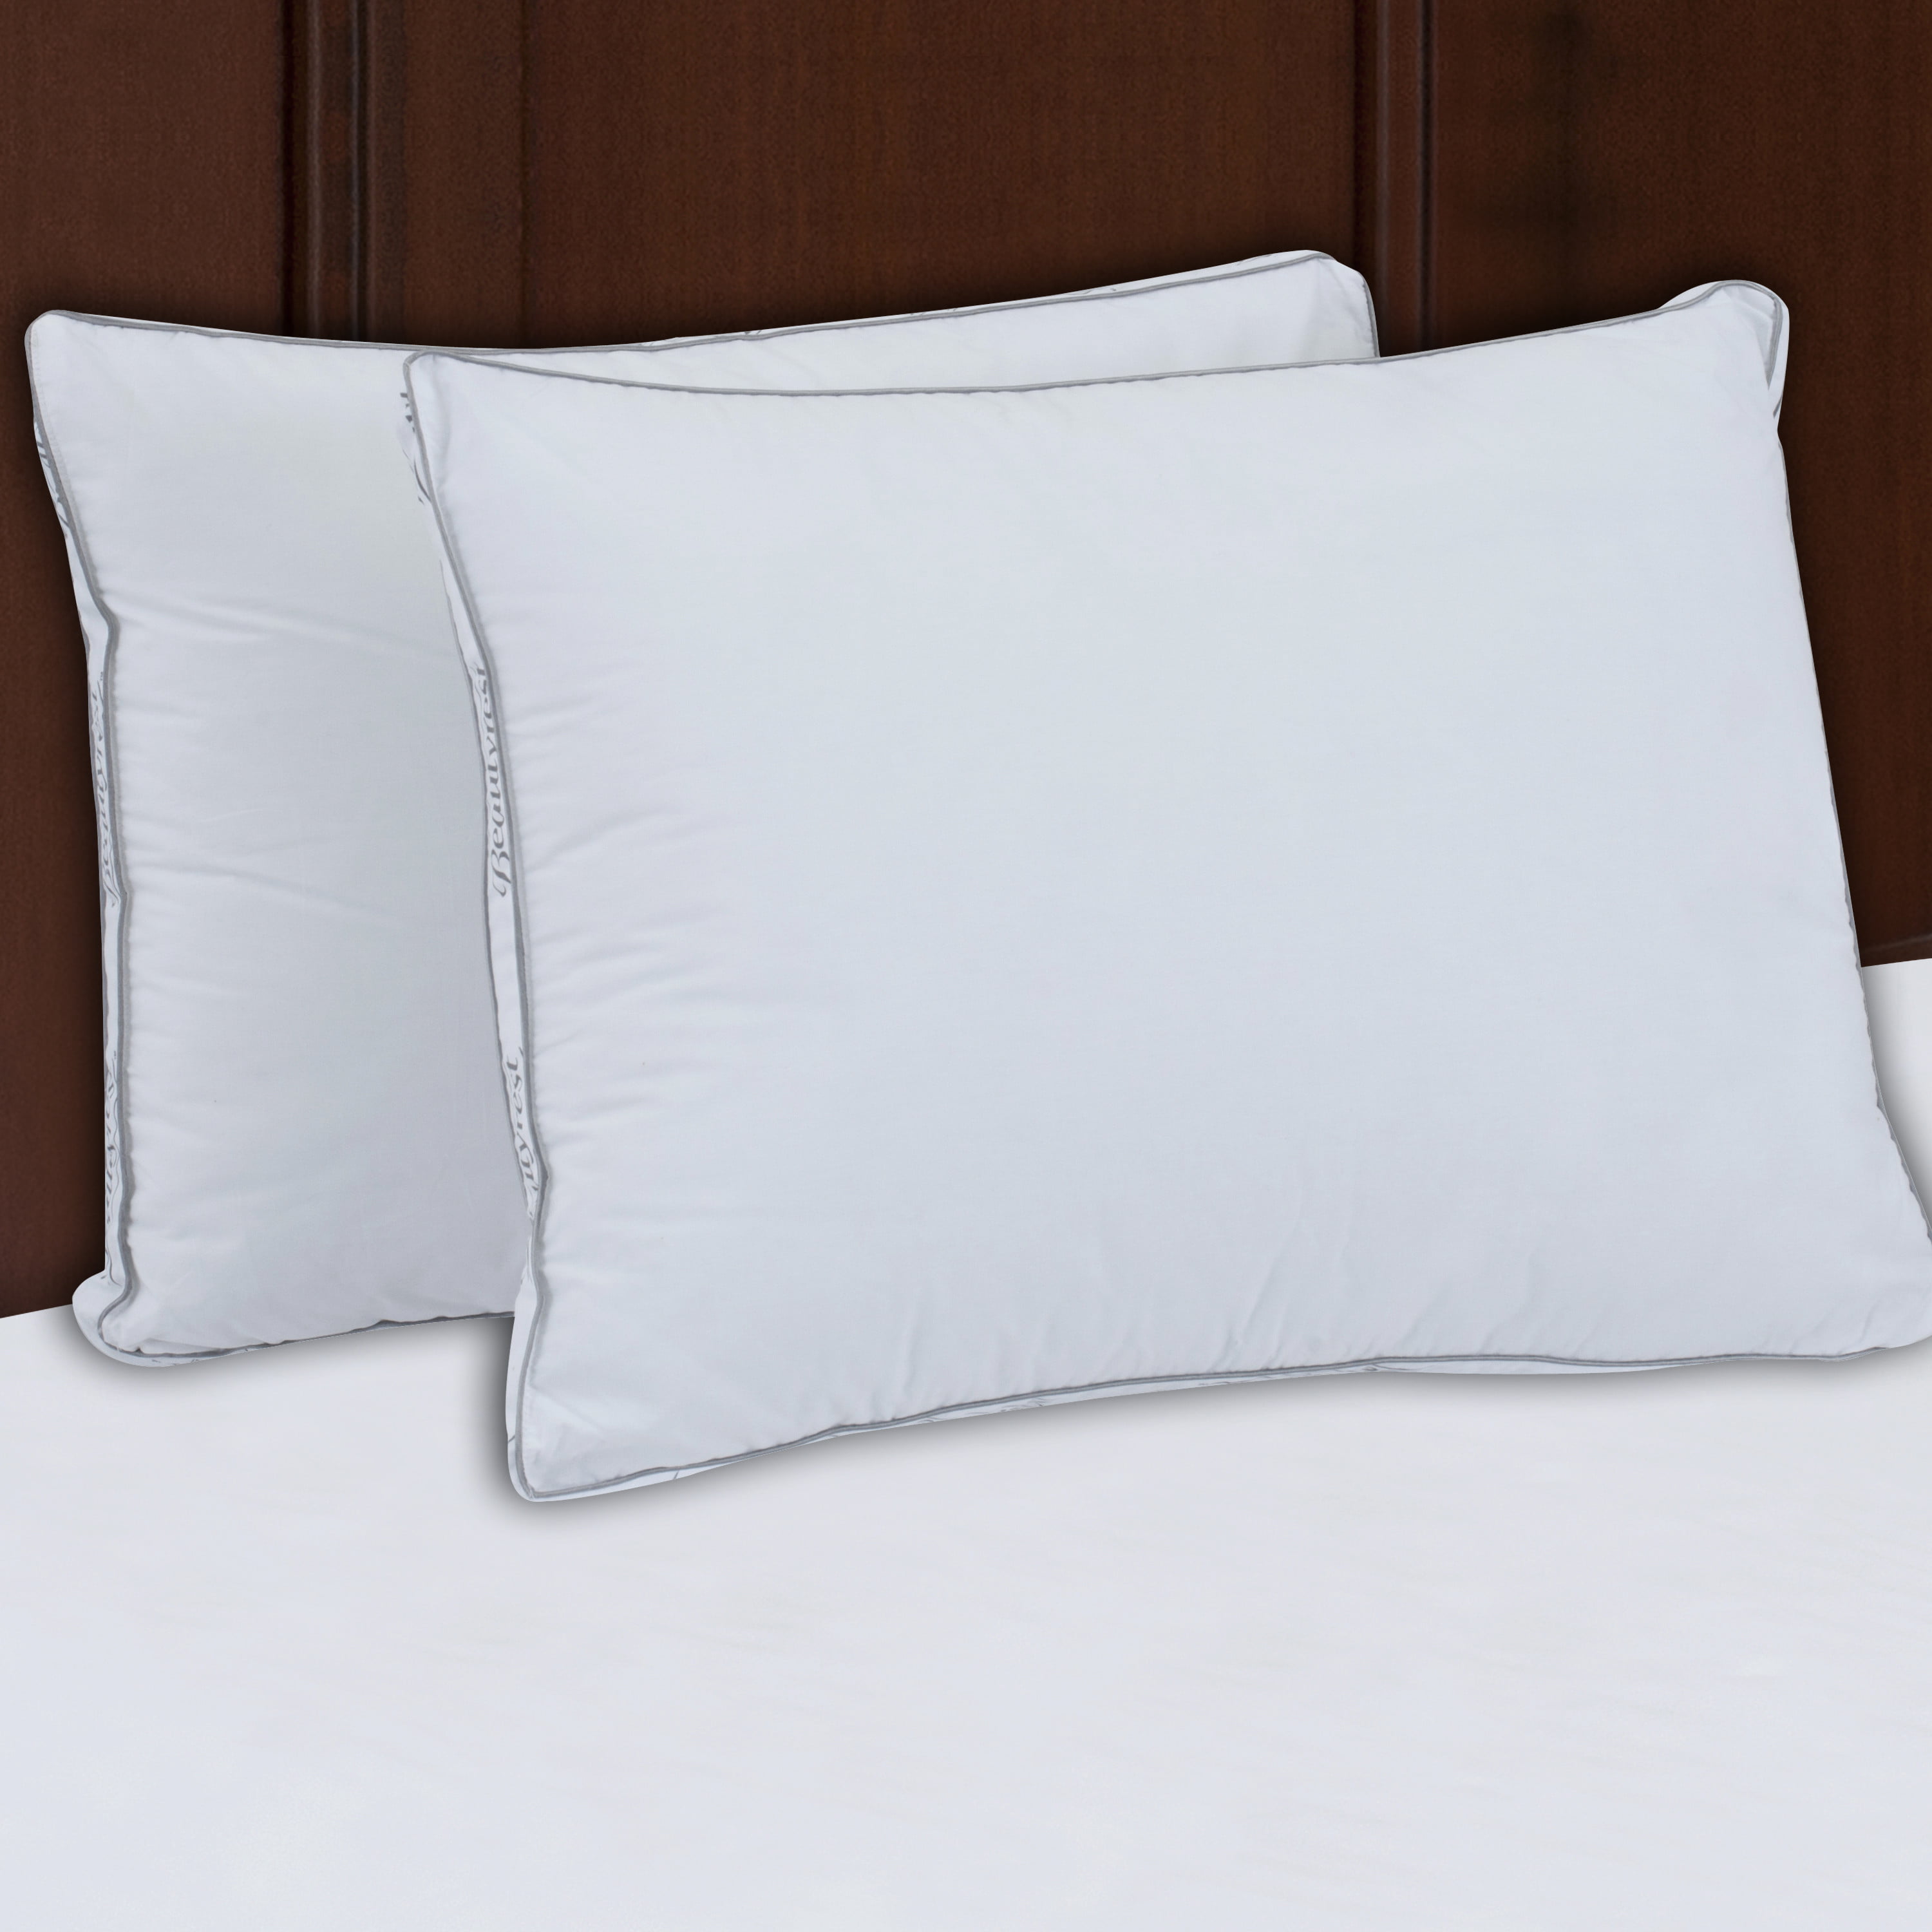 Beautyrest Bed Pillow Set of 2 Extr Firm Cotton Spa Bedroom Comfort Neck Support 